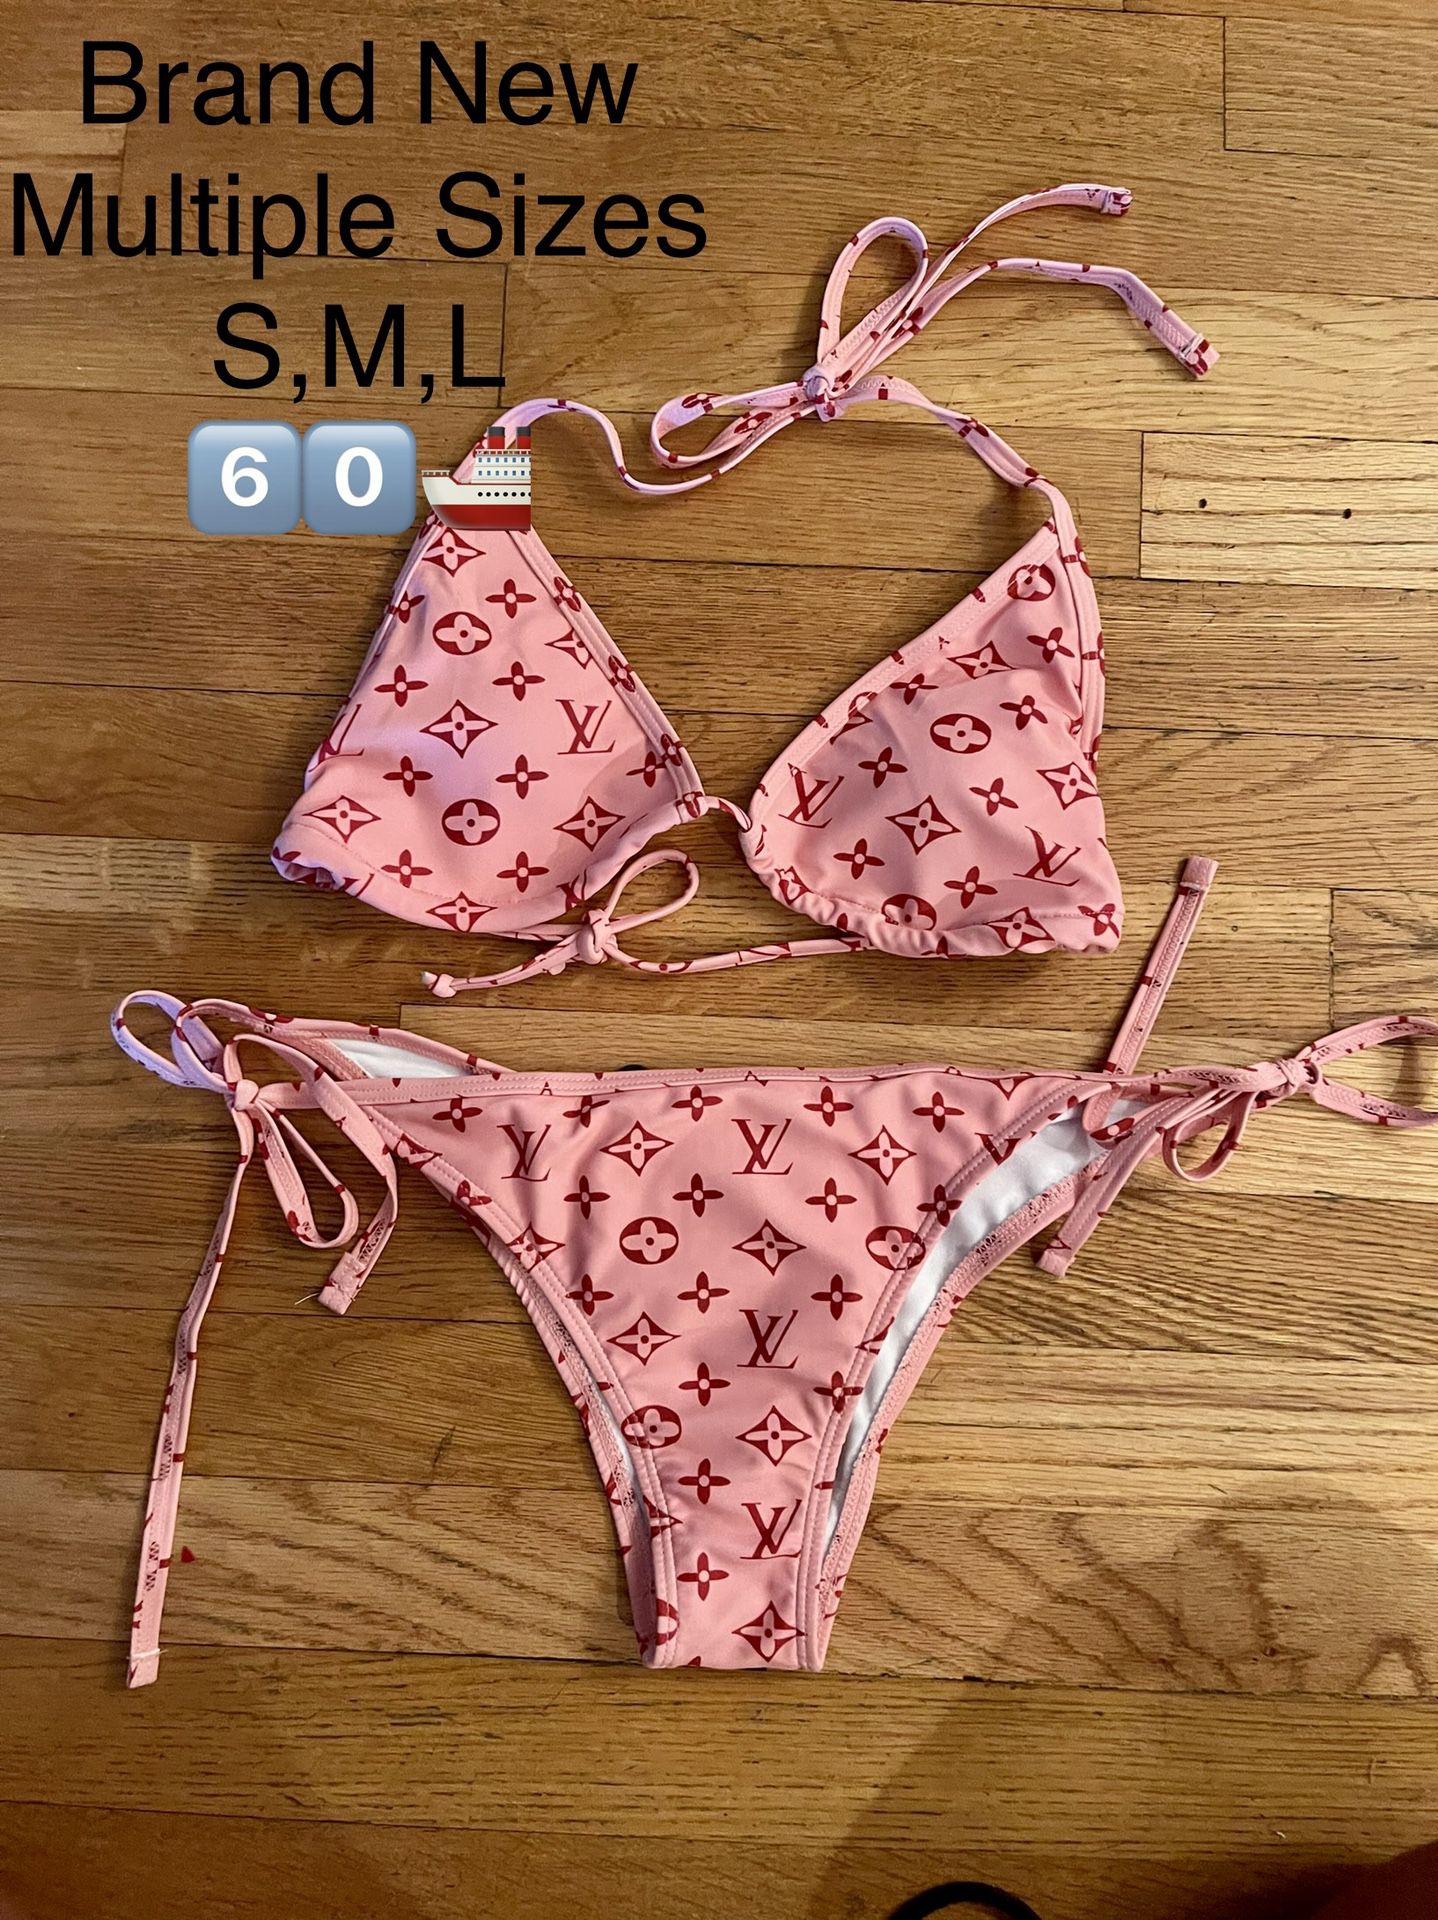 Designer Swim Suits Bikini Louis Vuitton for Sale in Houston, TX - OfferUp